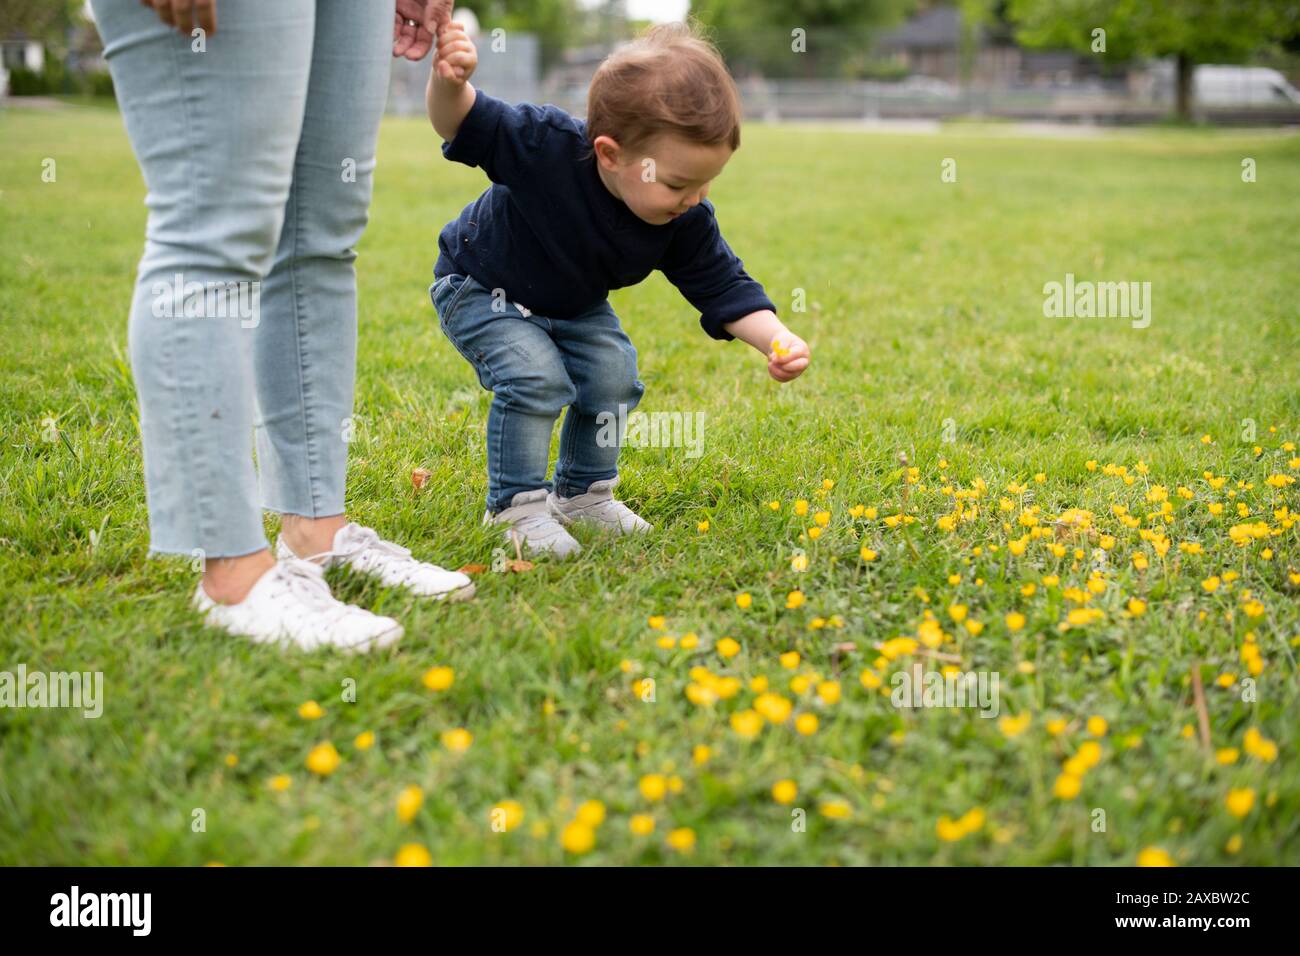 Cute innocent toddler girl picking flowers in park grass Stock Photo